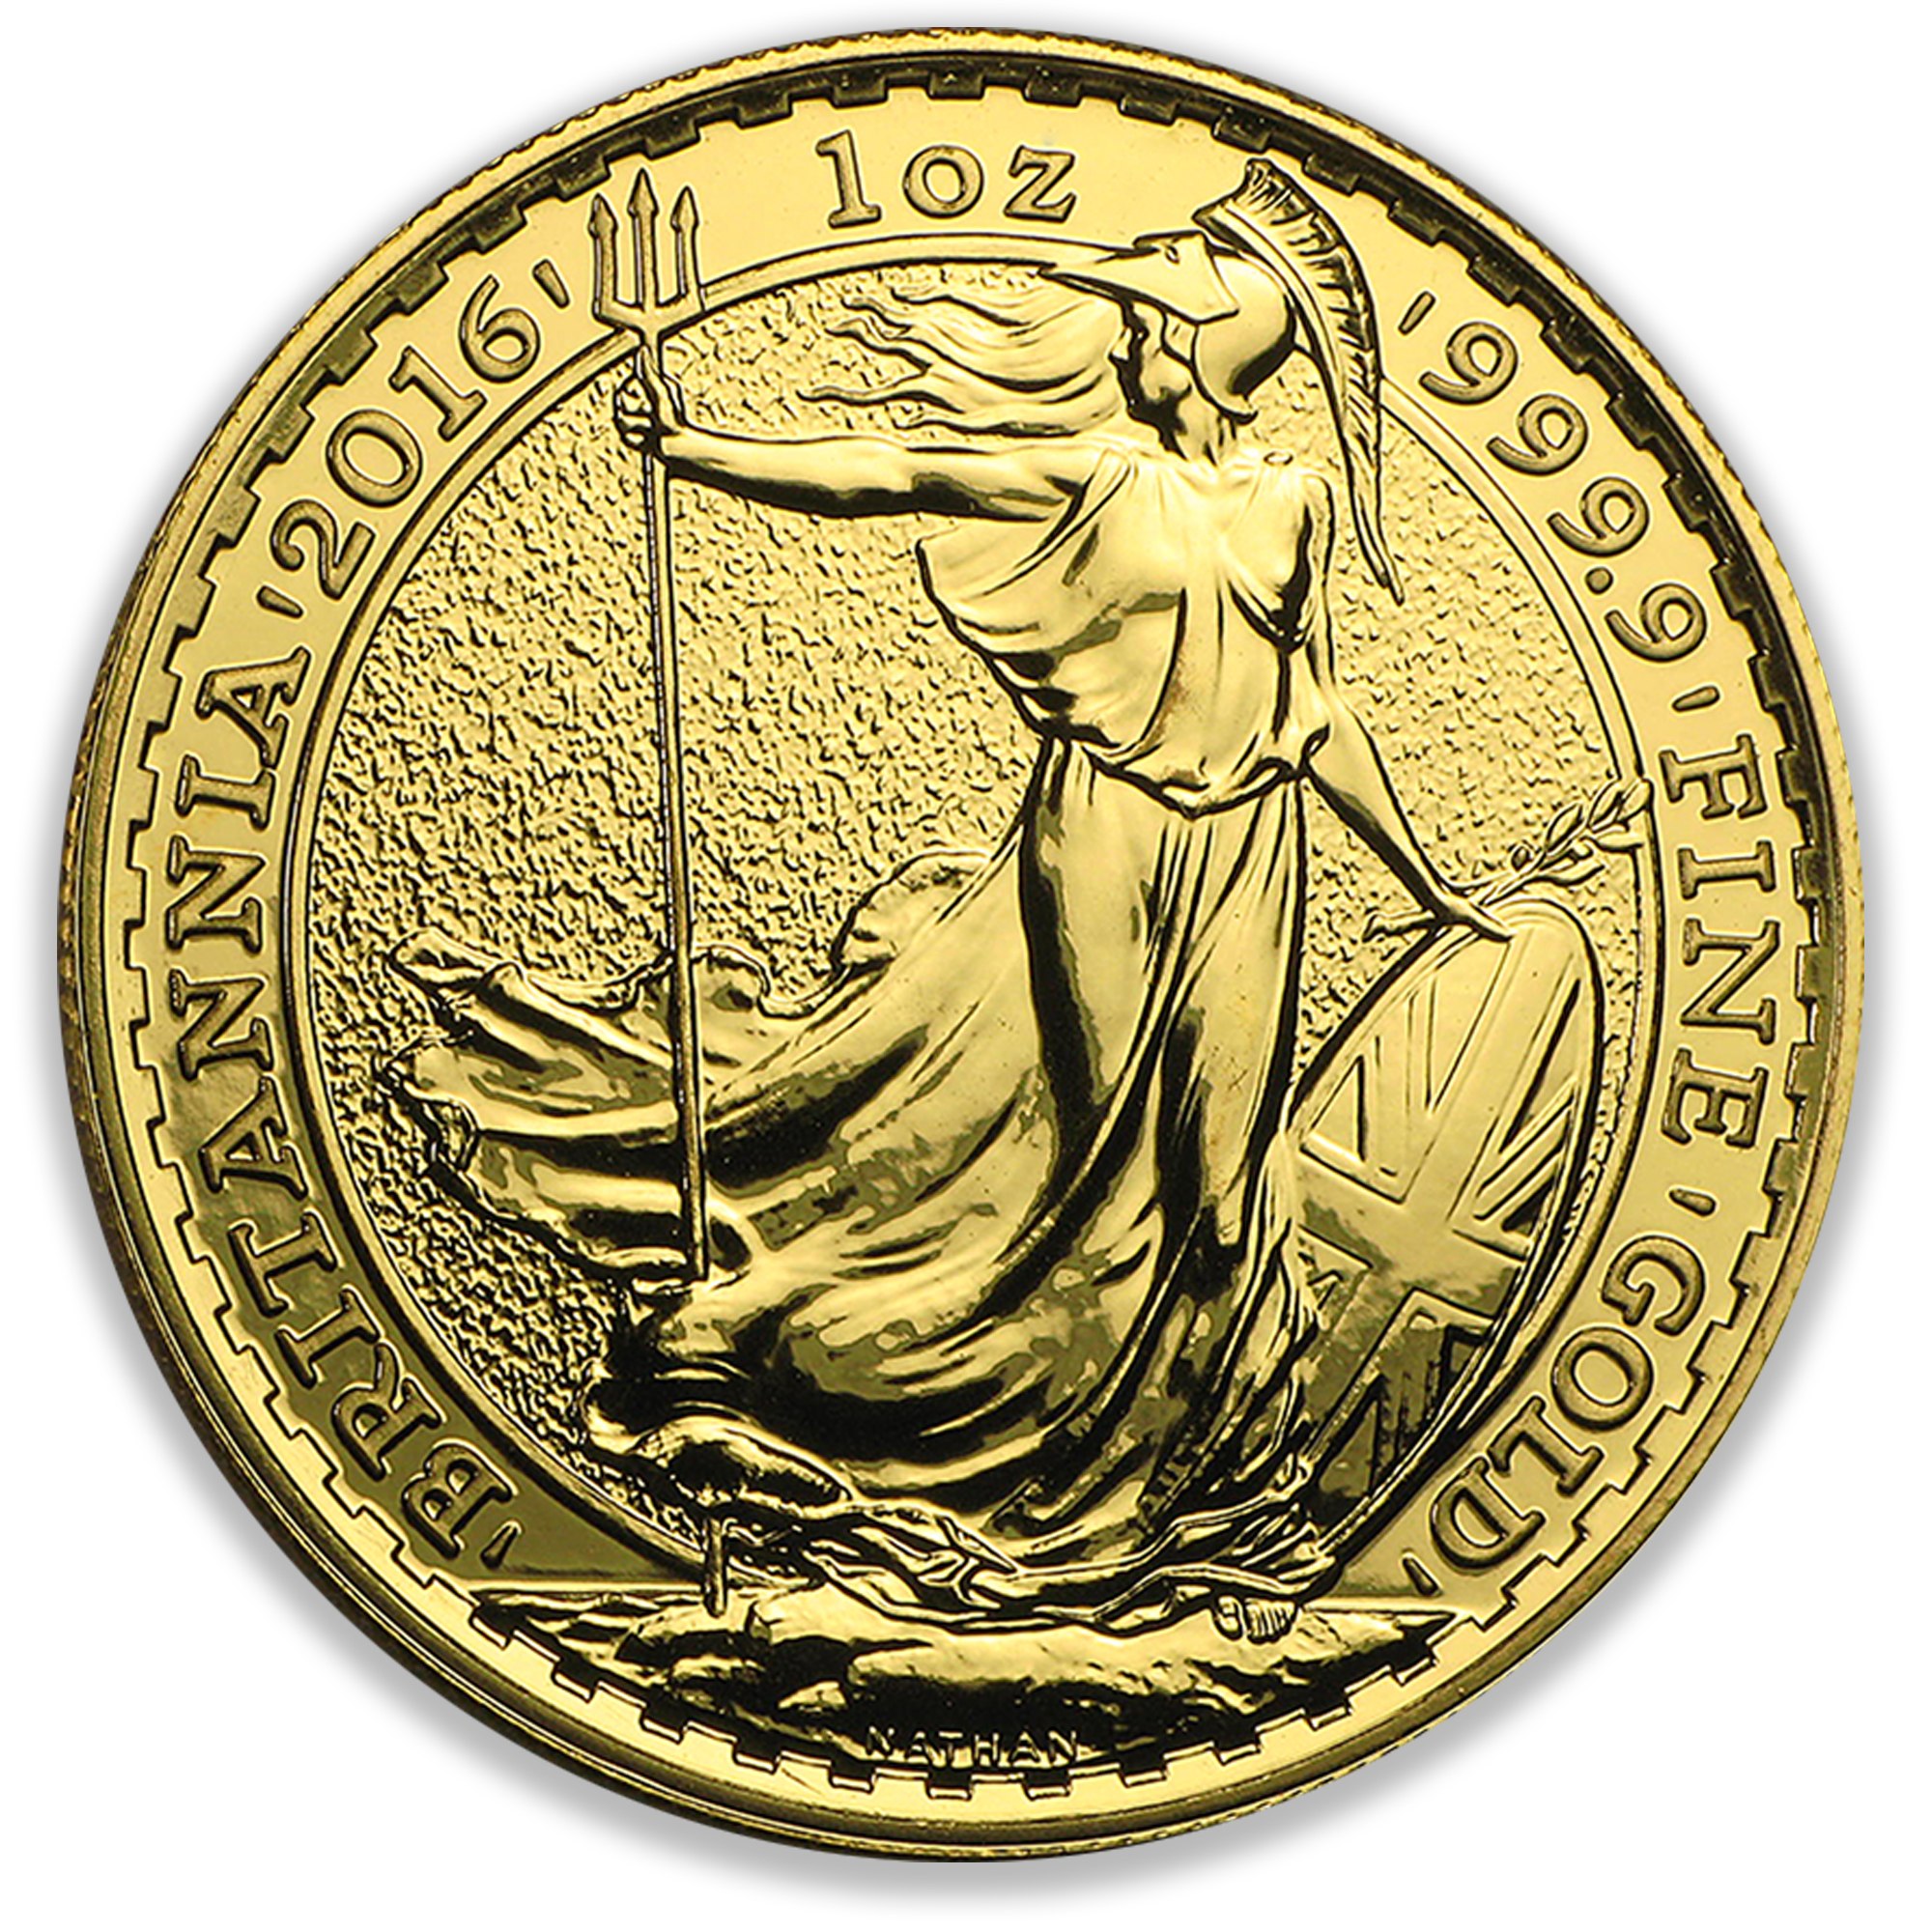 1oz Royal Mint Gold Britannia Coin Secondary